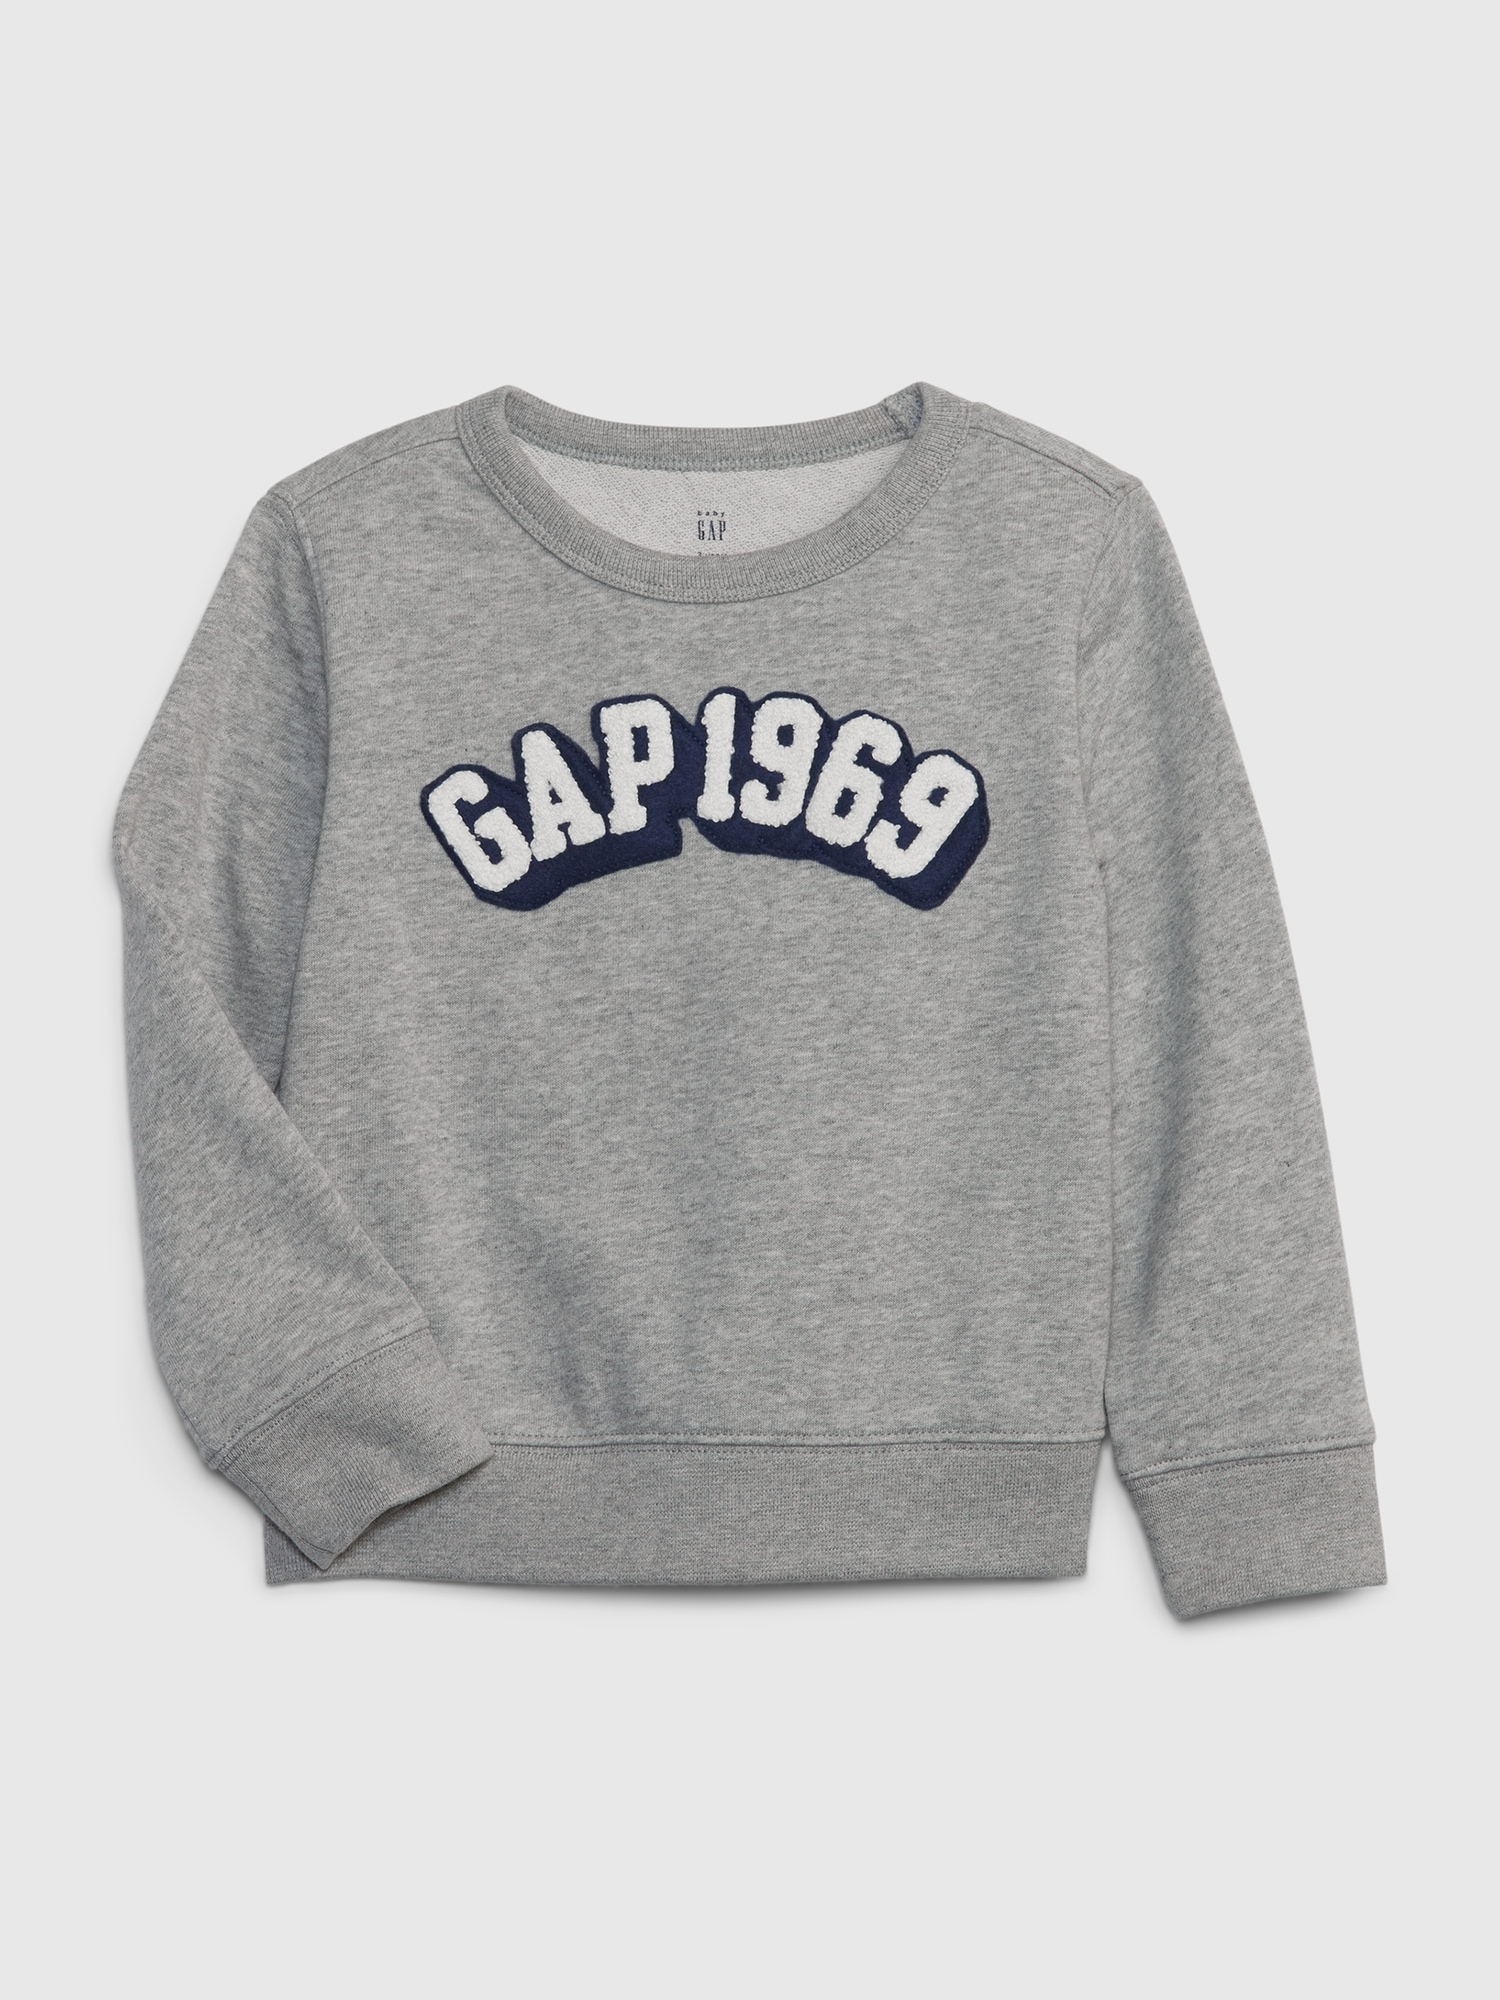 GAP 1969 アーチロゴ スウェット - Gap公式オンラインストア